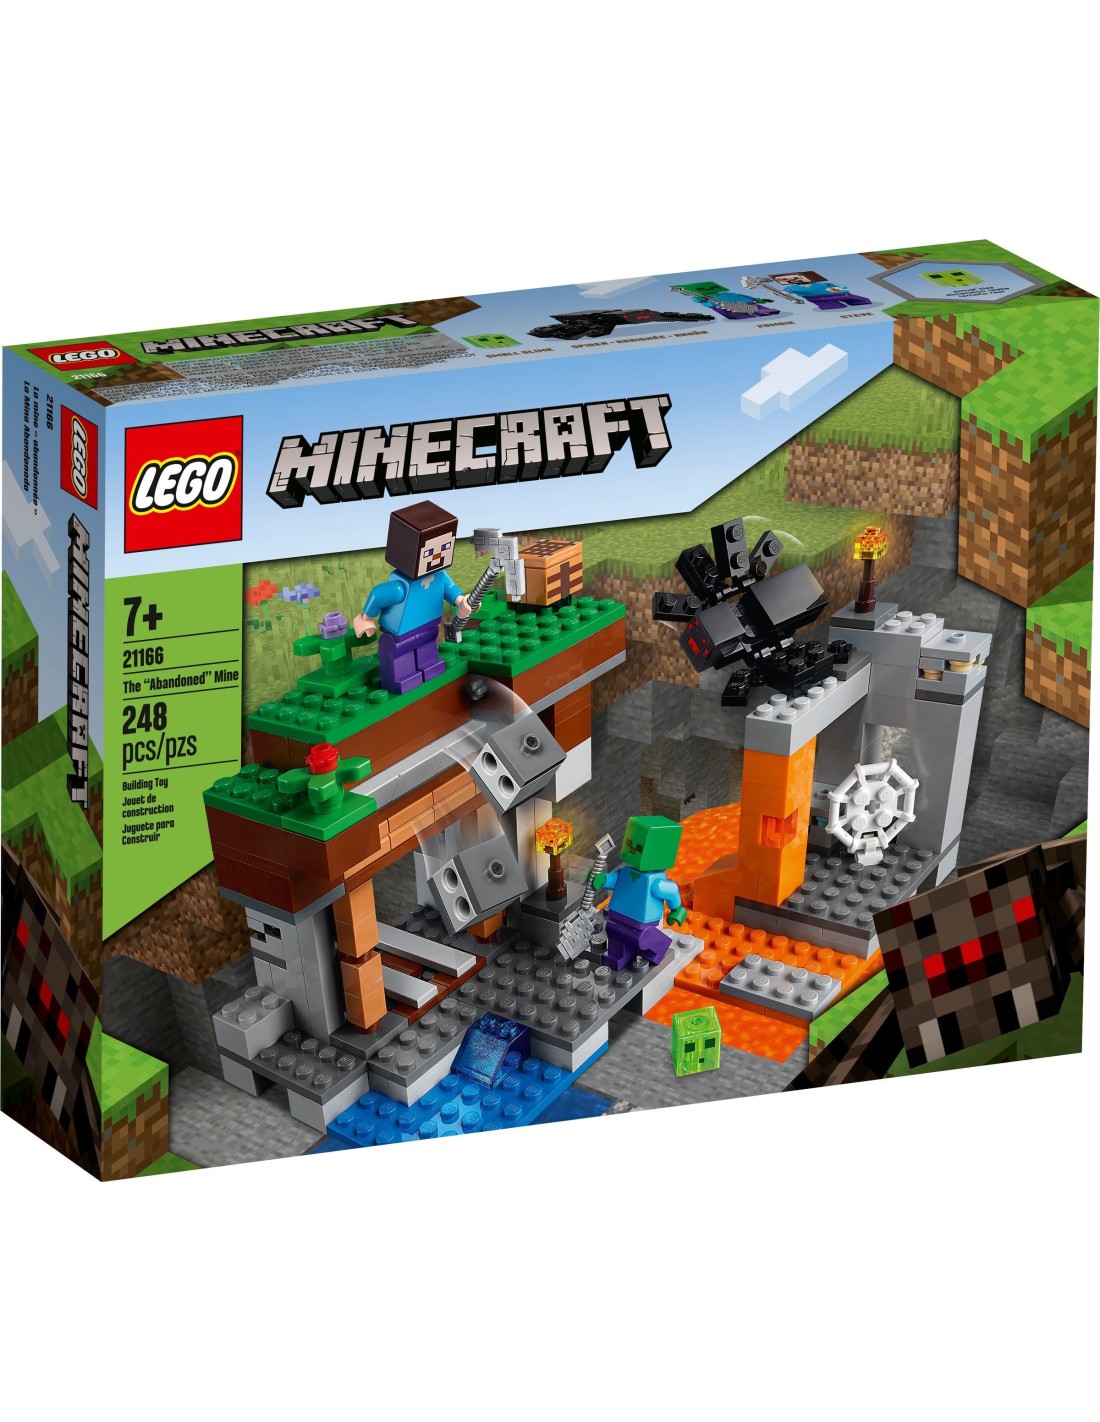 LEGO Minecraft - La mine abandonnée - 21166 - En stock chez